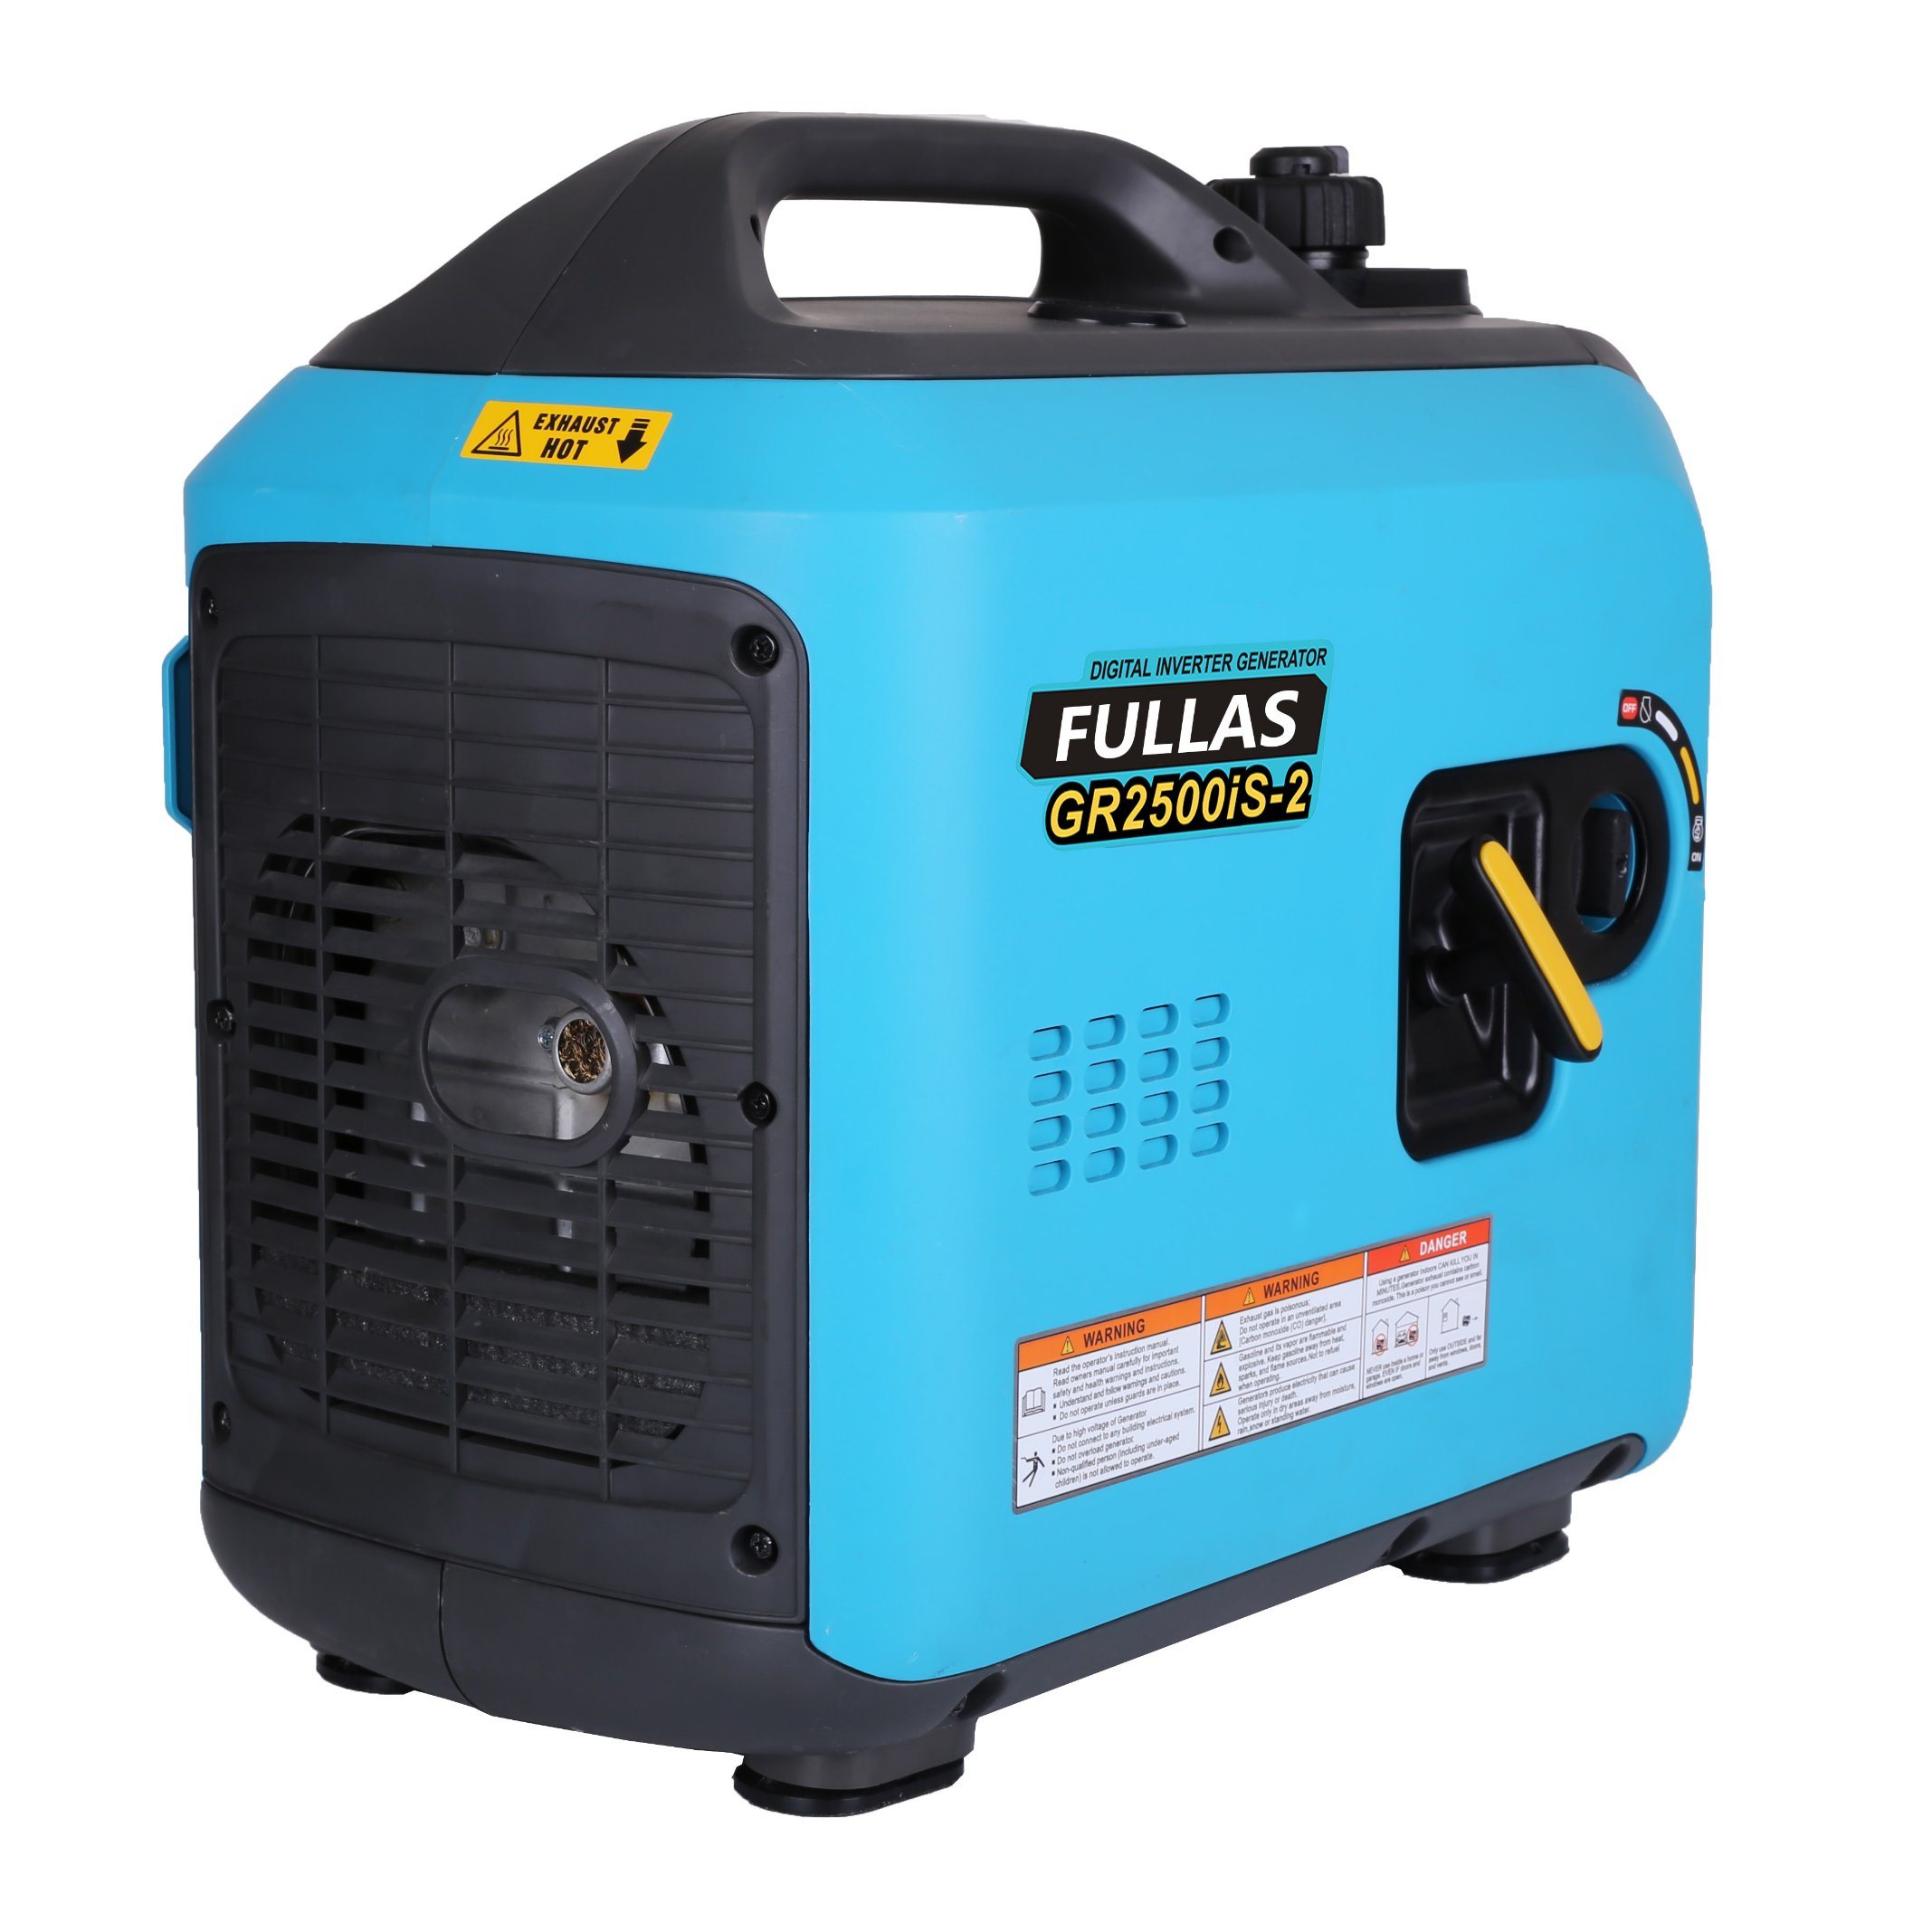 Fullas FP2500iS-2 2.5KW Inverter Generator Powered by 98CC Petrol Engine